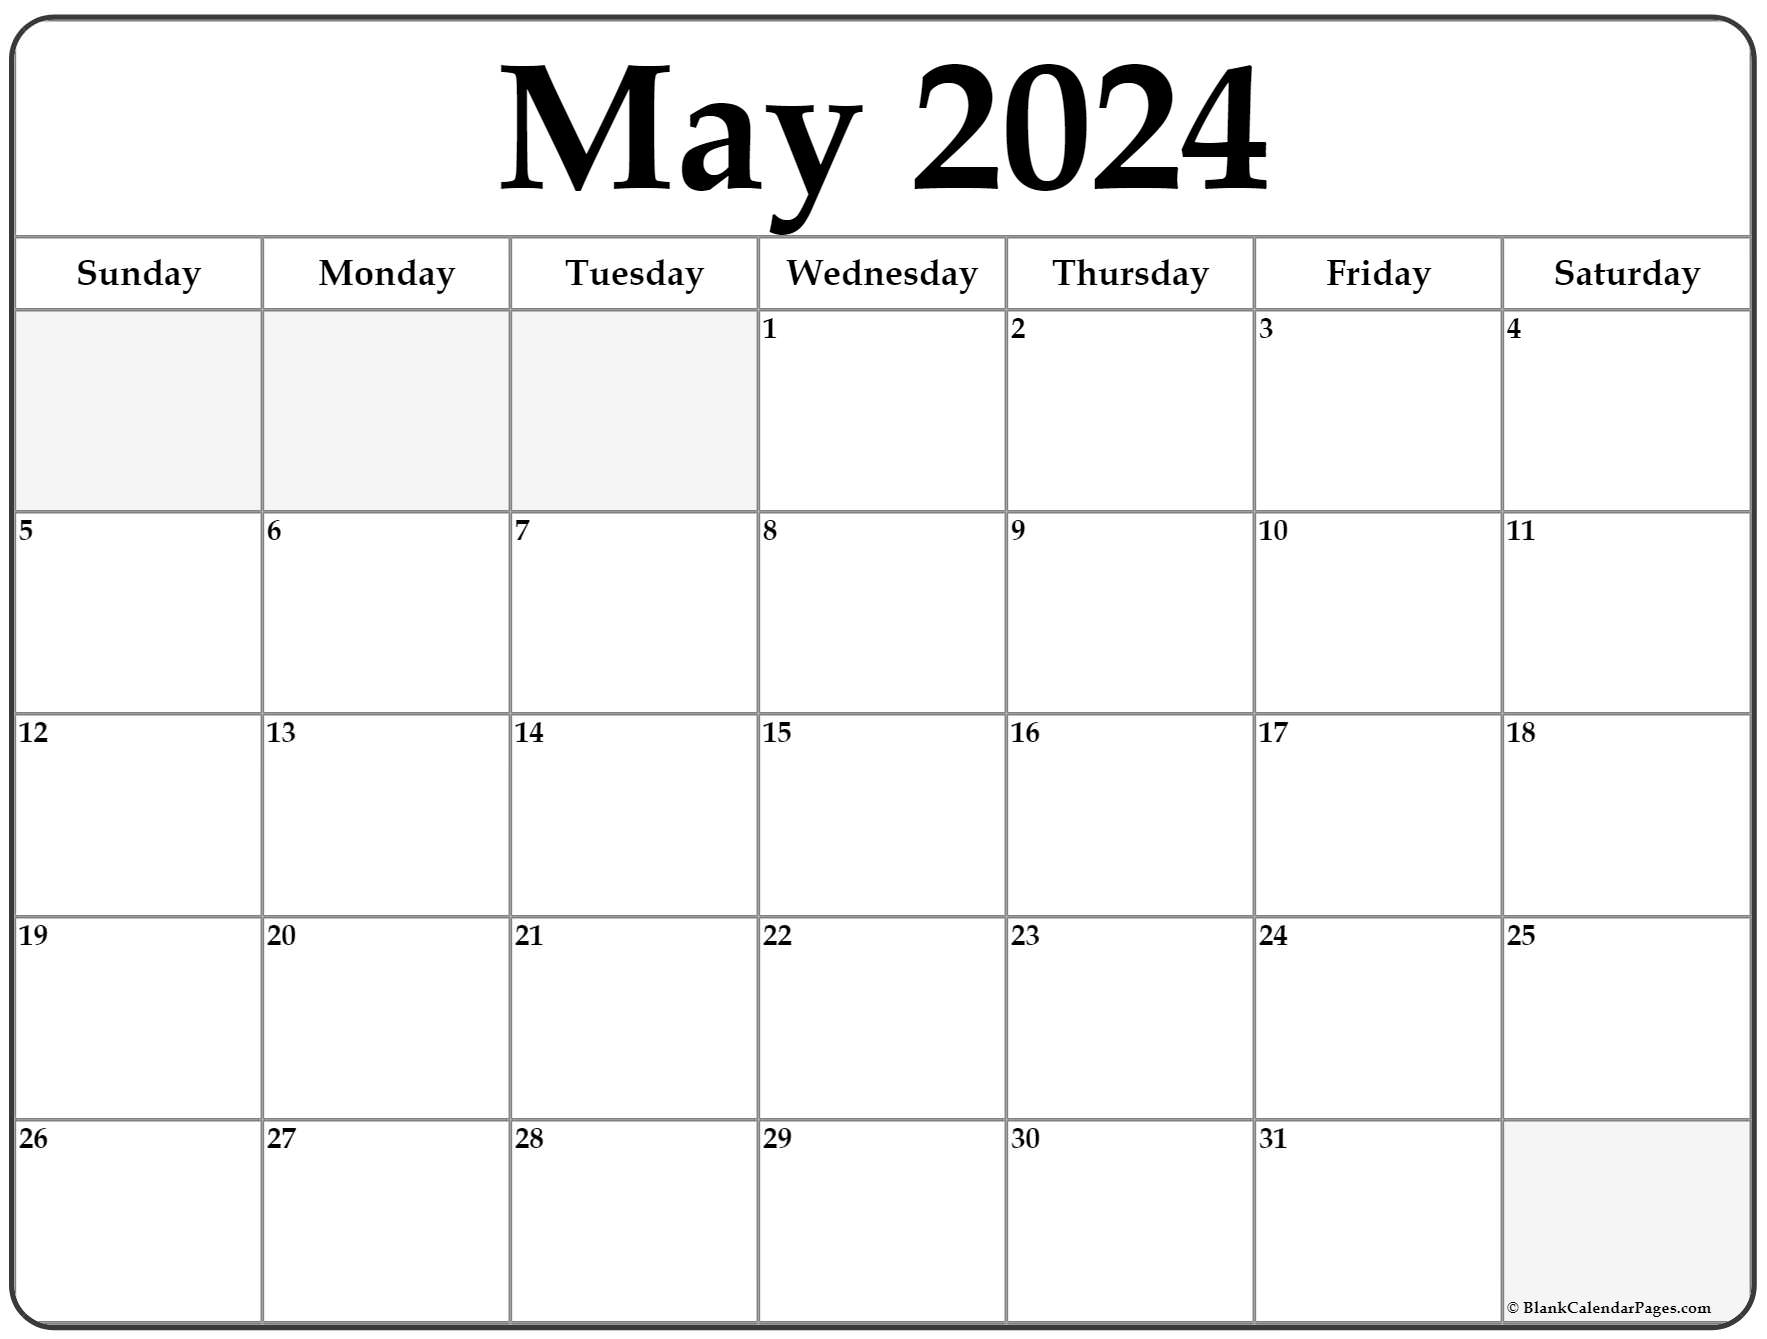 Free May 2022 Calendar May 2022 Calendar | Free Printable Calendar Templates